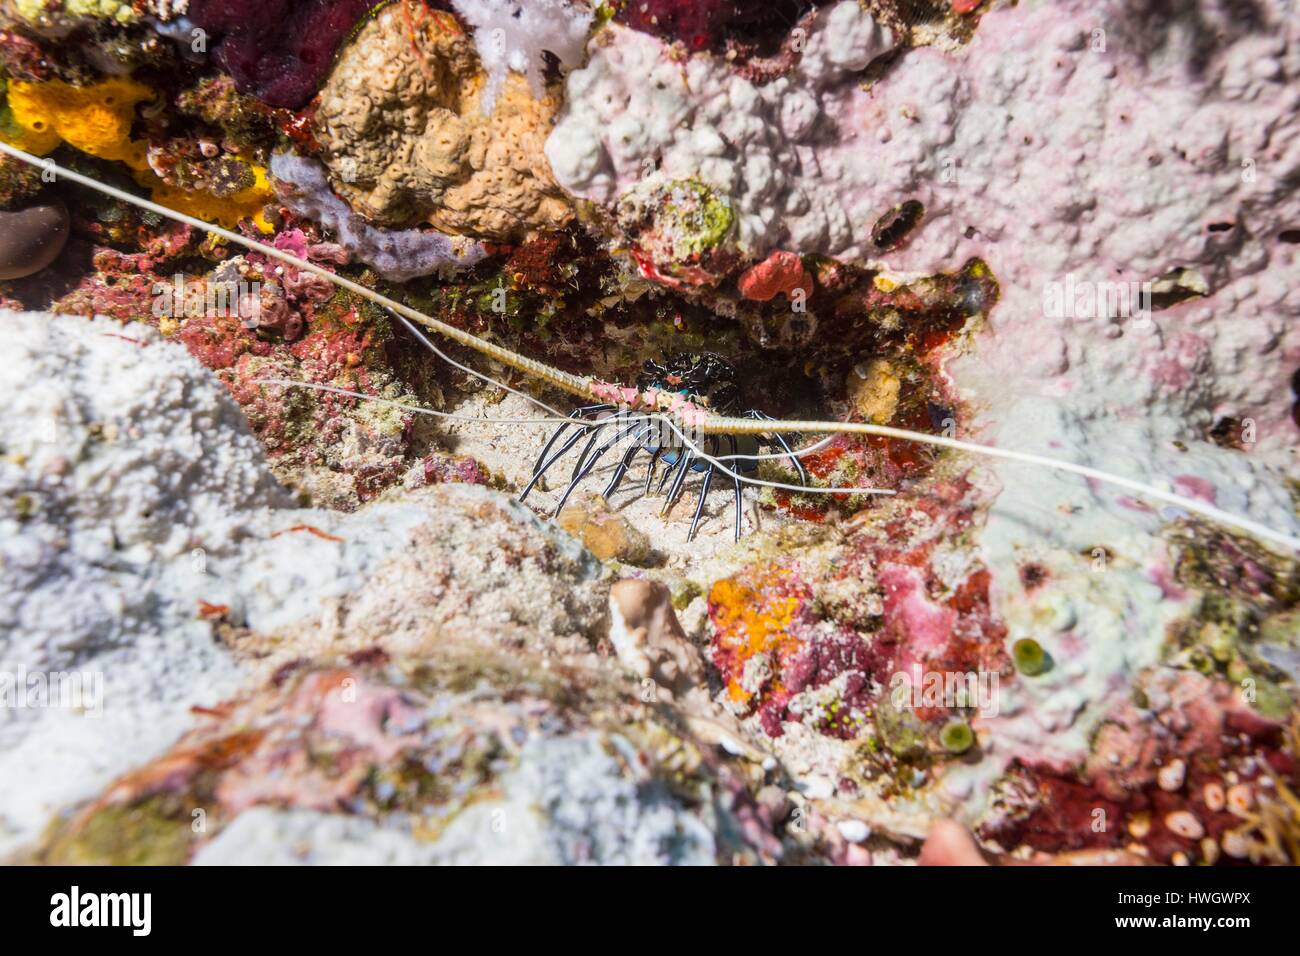 Philippines, Mindoro, Apo Reef Natural Park, Spiny Lobster (Panulirus sp.) Stock Photo